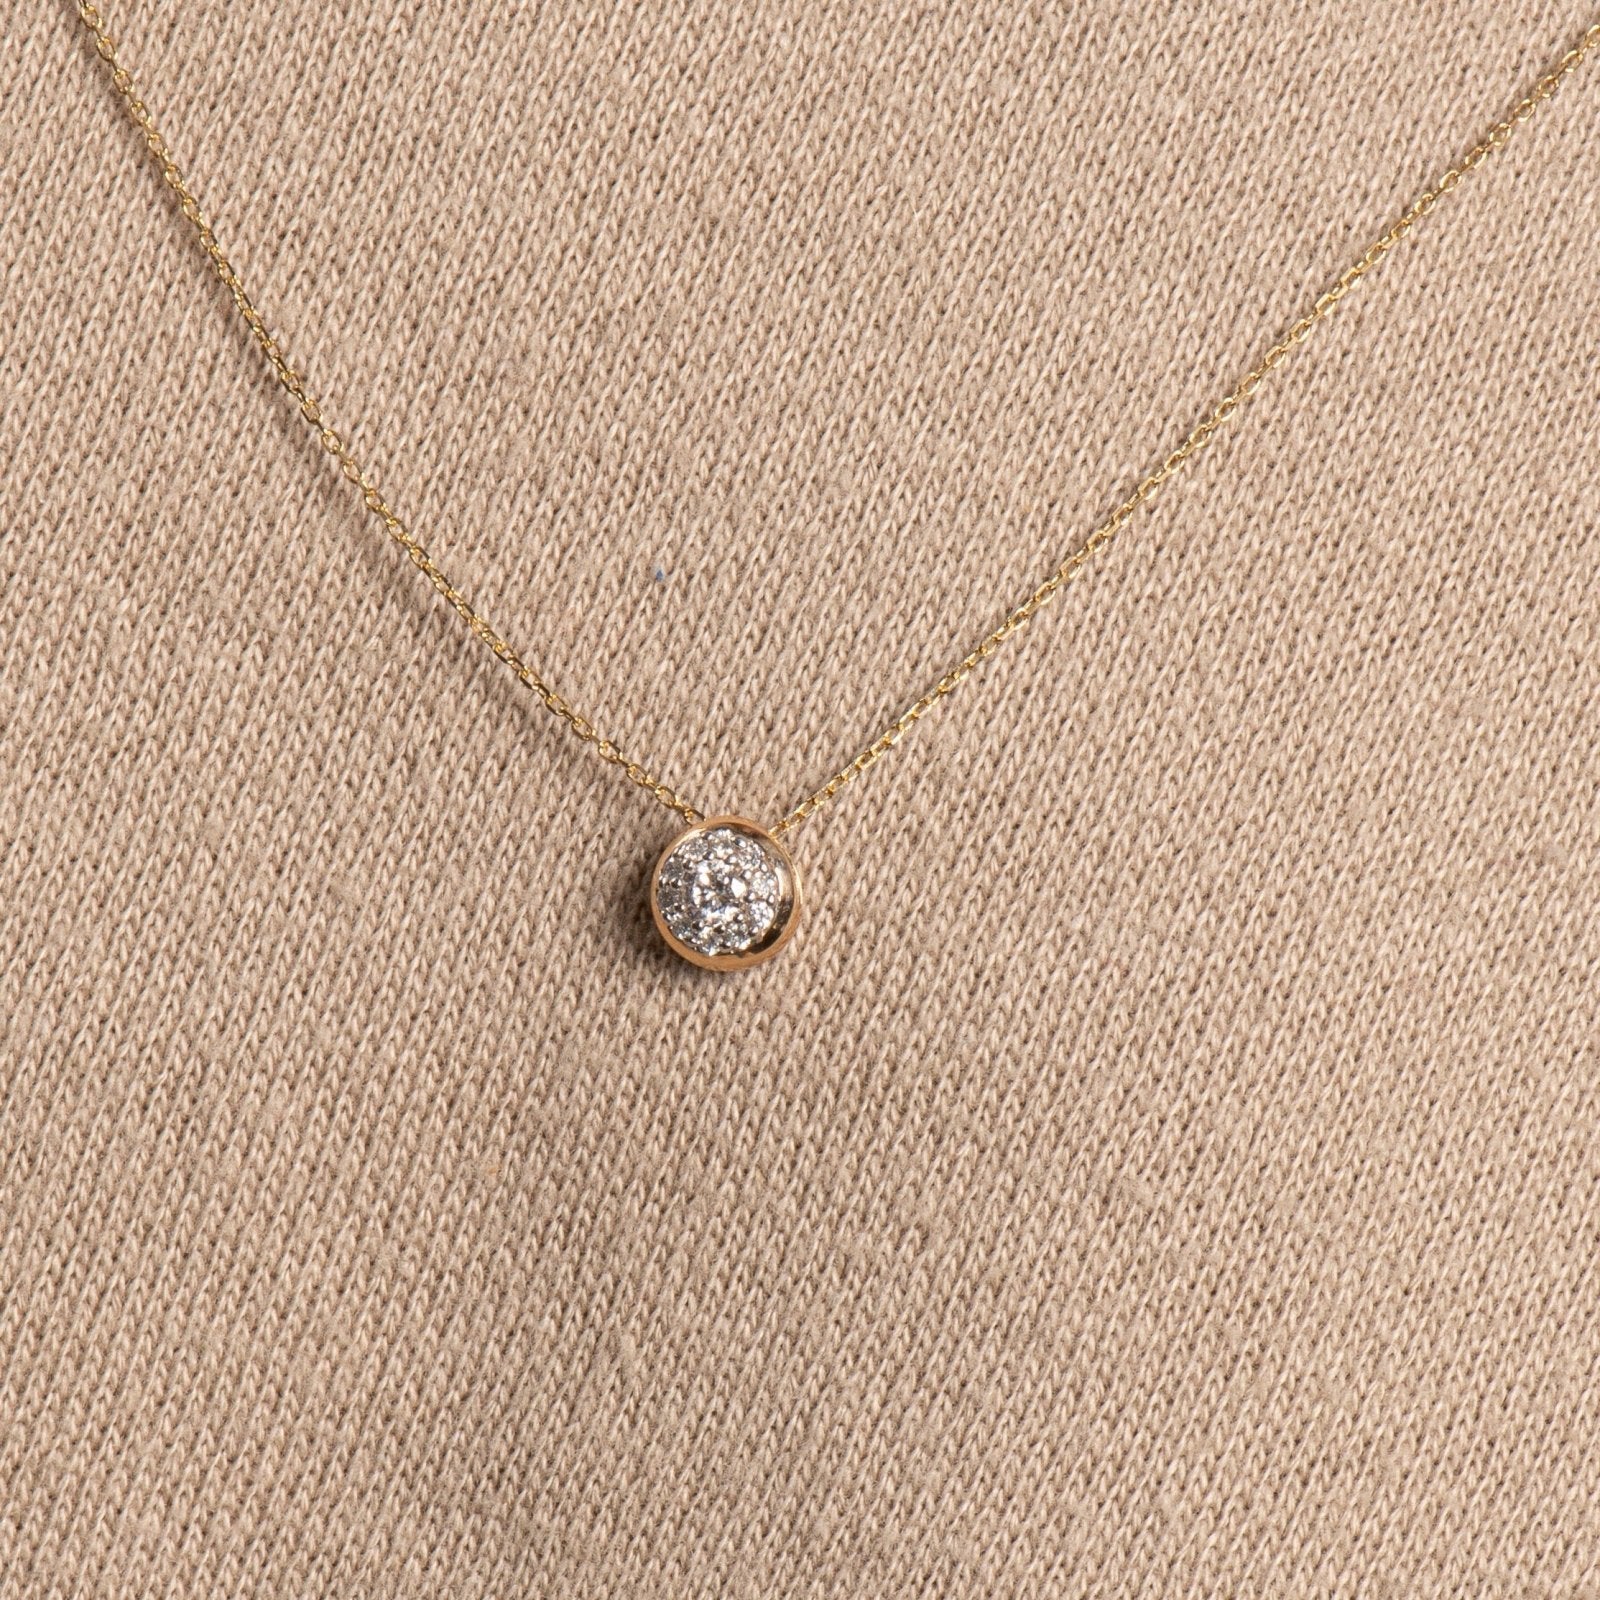 Round Diamond Illusion Necklace Necklaces Estella Collection #product_description# 32741 Diamond Made to Order Pendant Necklace #tag4# #tag5# #tag6# #tag7# #tag8# #tag9# #tag10#